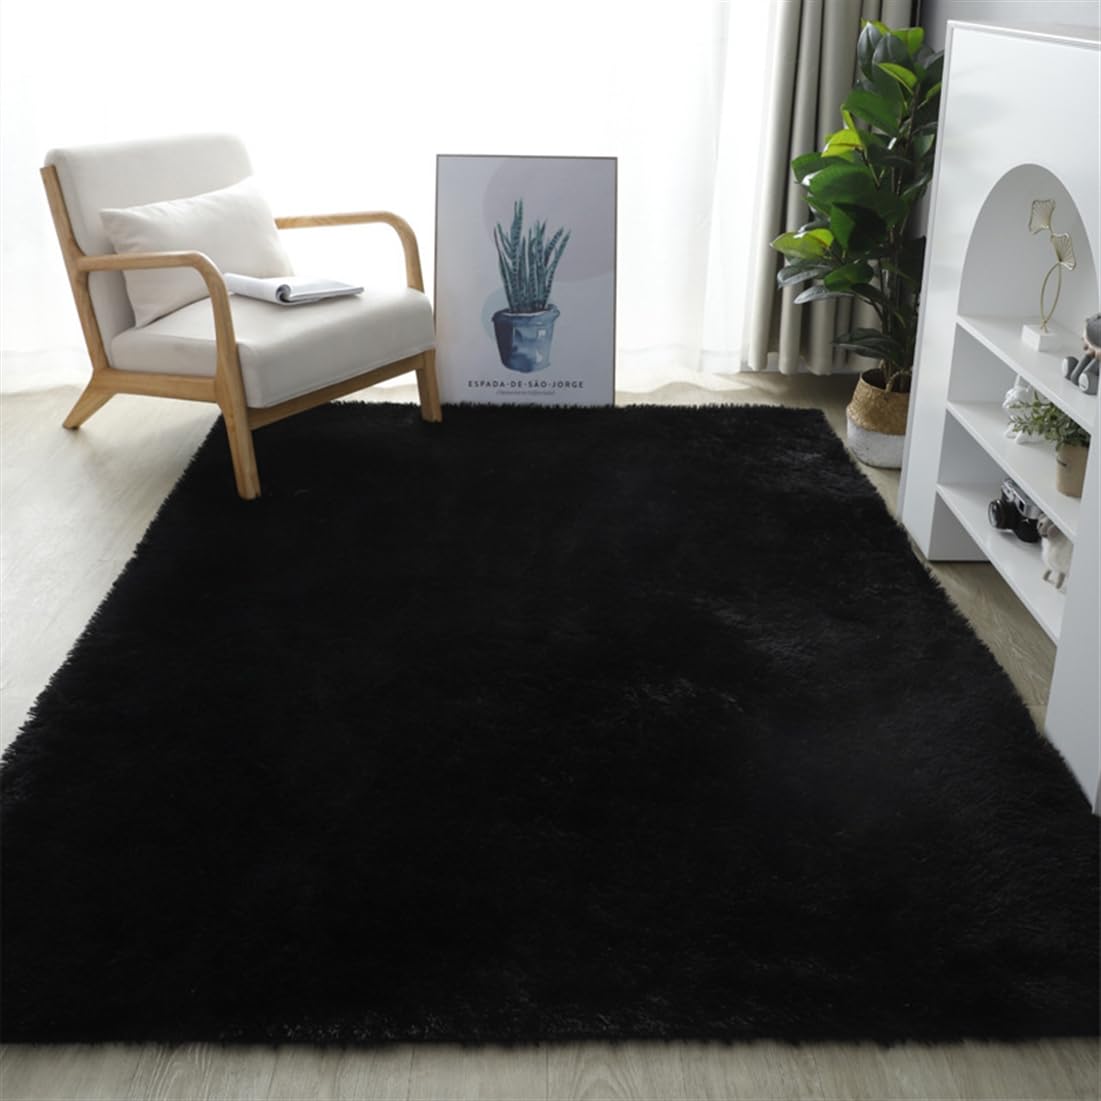 UEAUY Rectangle Area Rug Soft Fluffy Nursery Rugs Washable Non Slip Modern Carpet for Living Room Bedroom Home Décor Black 1.3 x 2 Feet